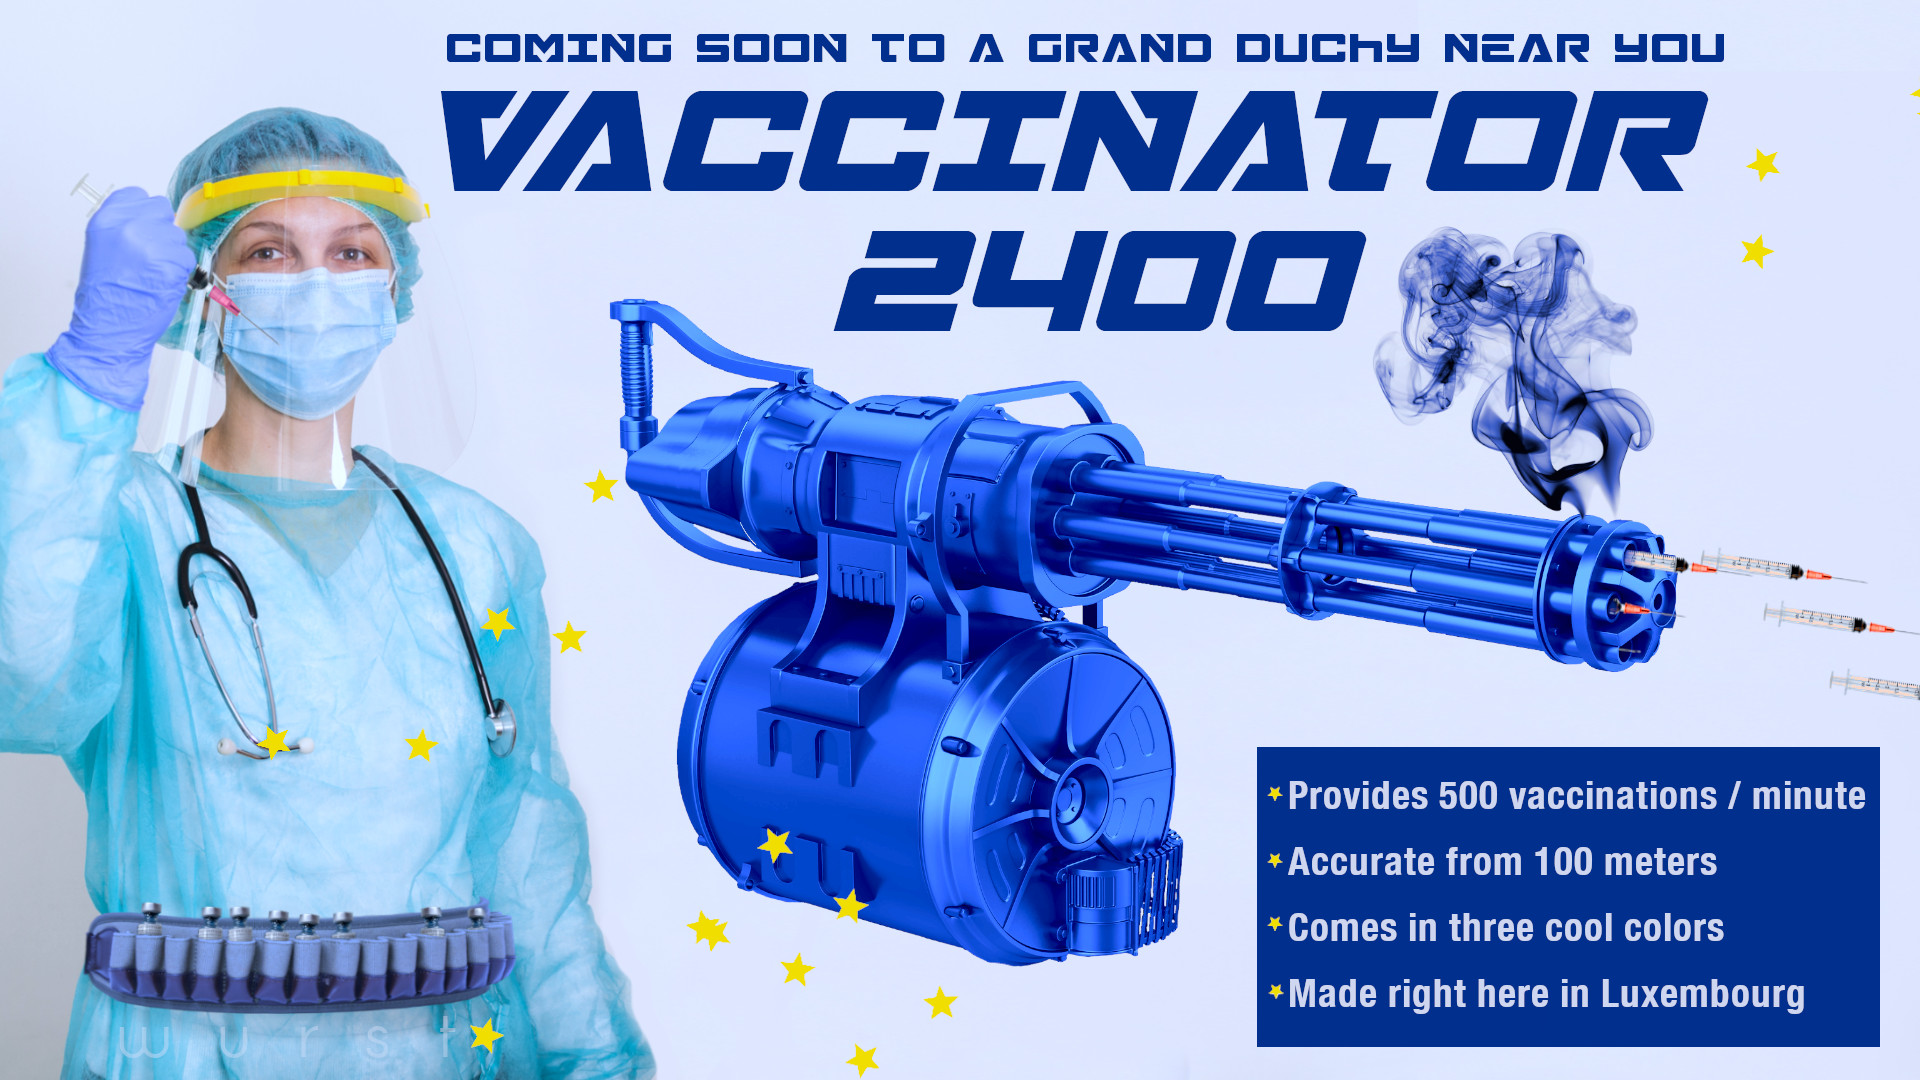 Vaccination gun the vaccinator